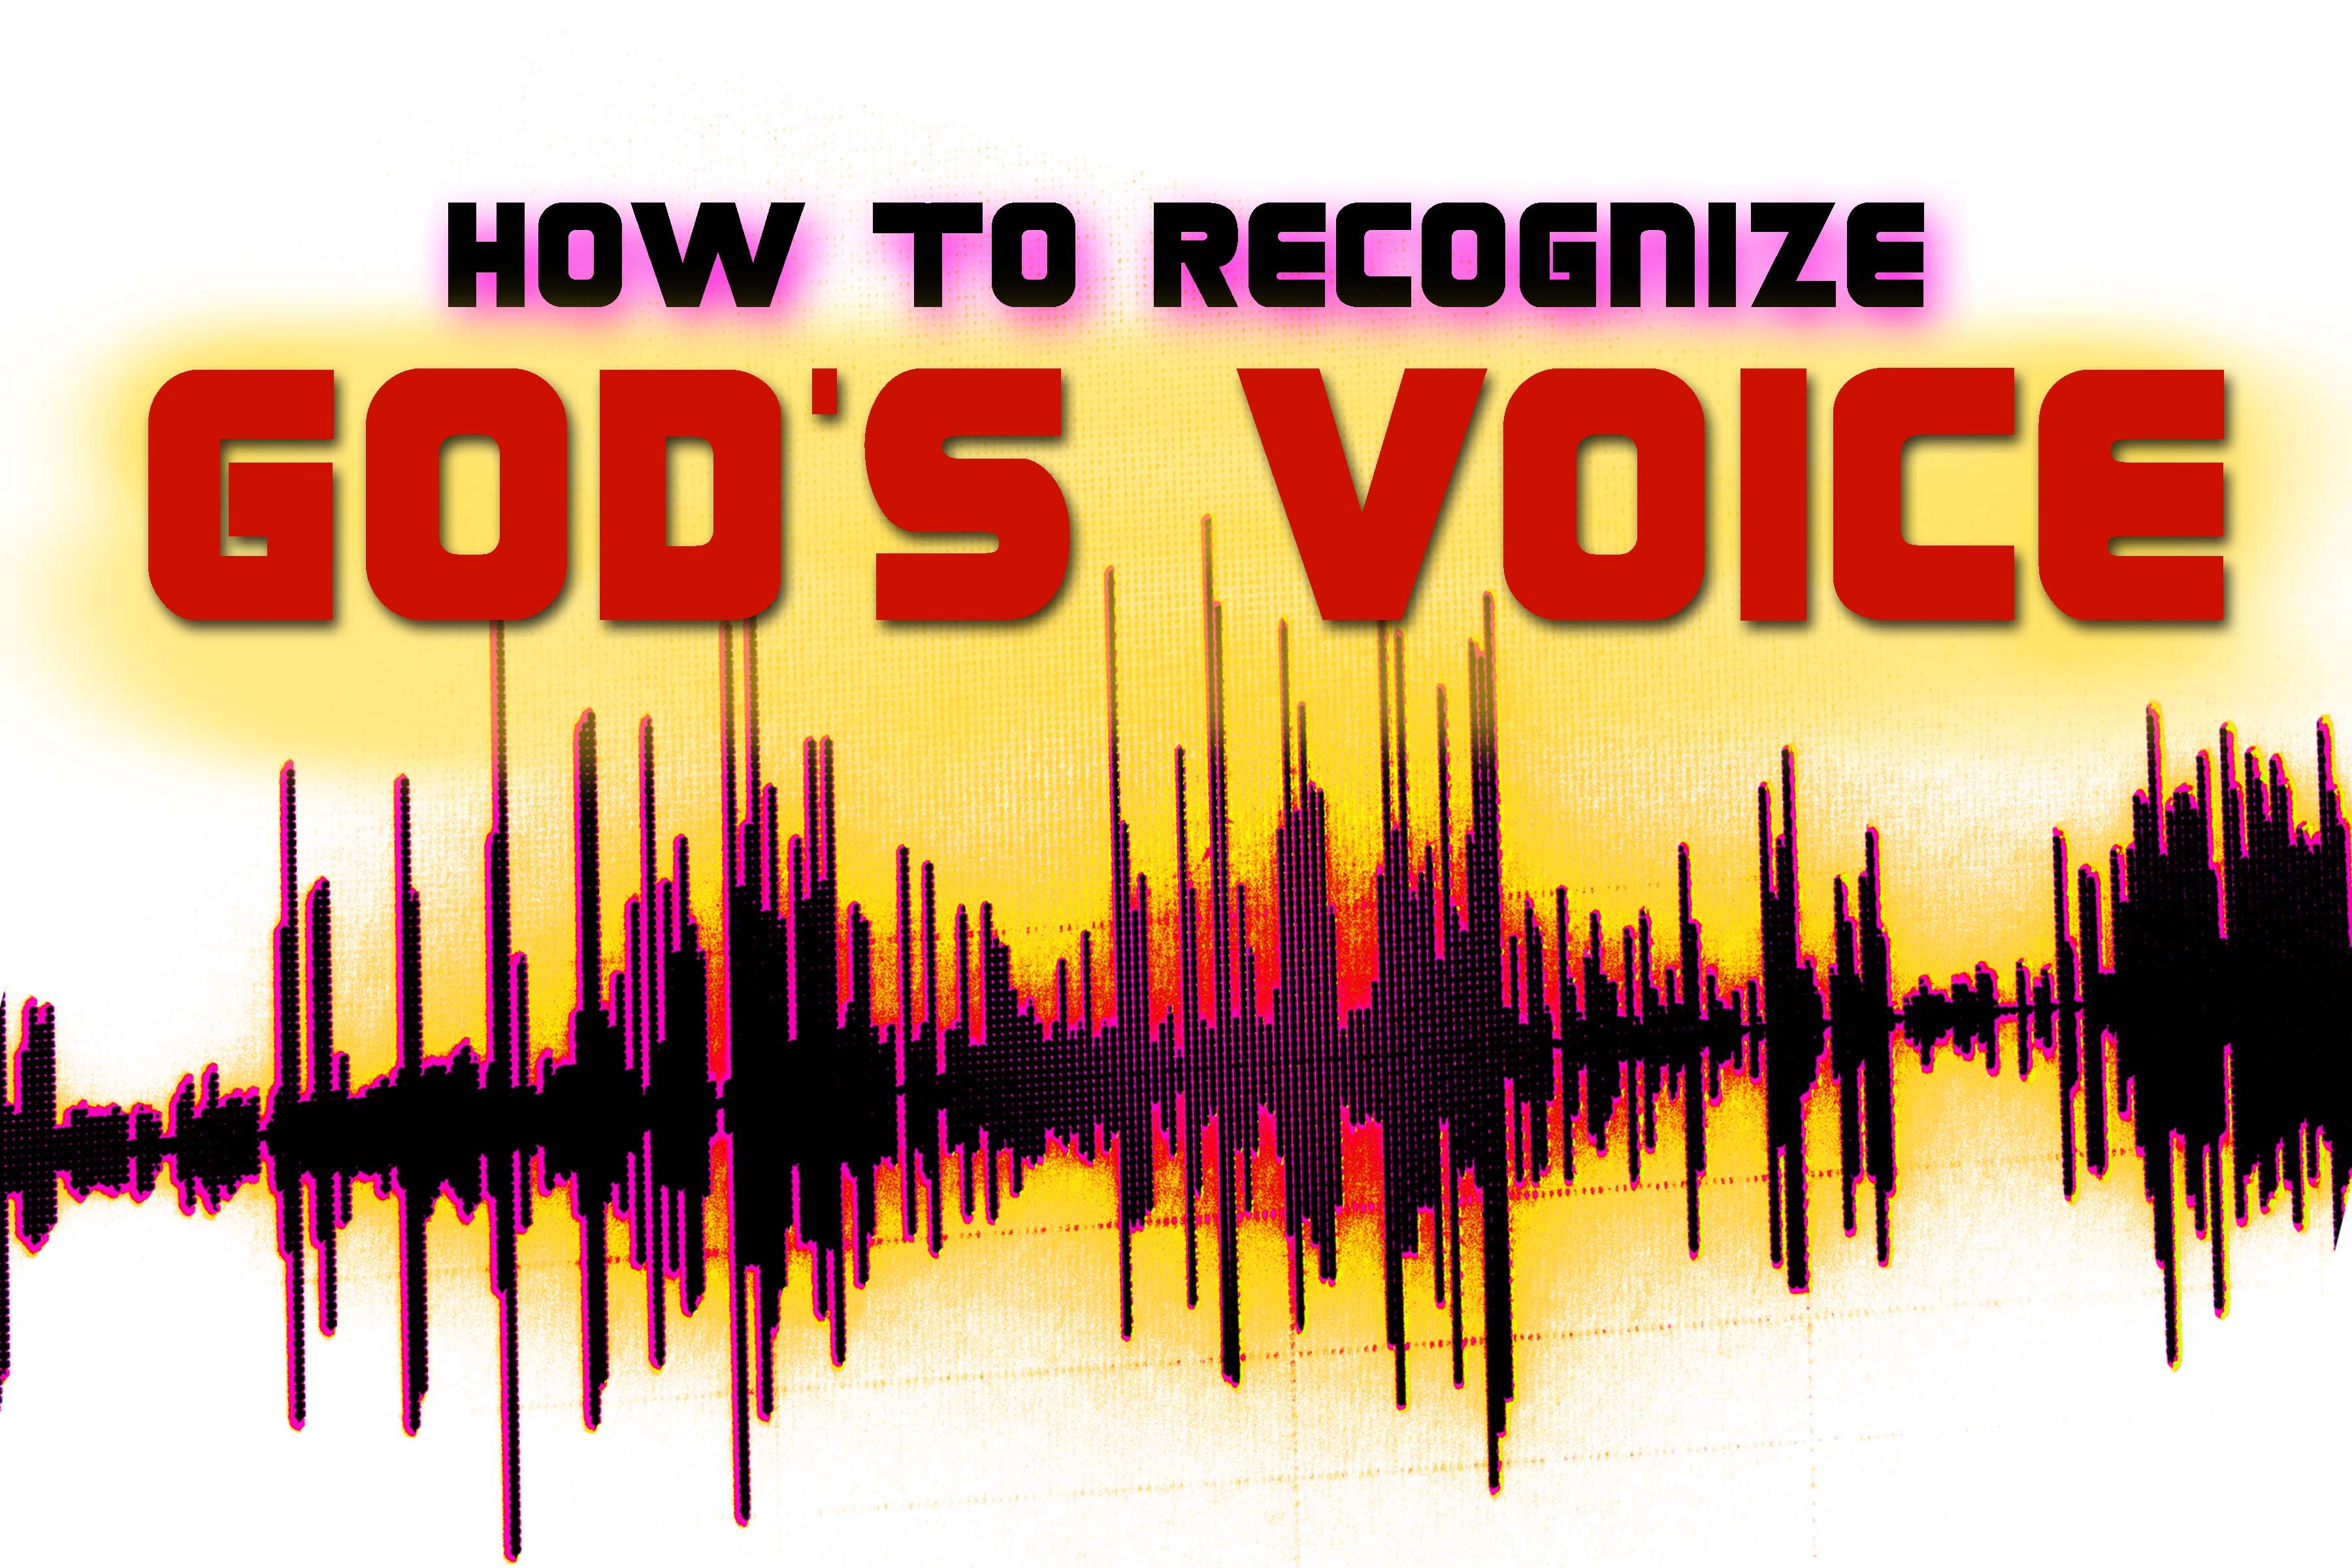 11-26-17 How to Recognize God's Voice - Part 2 